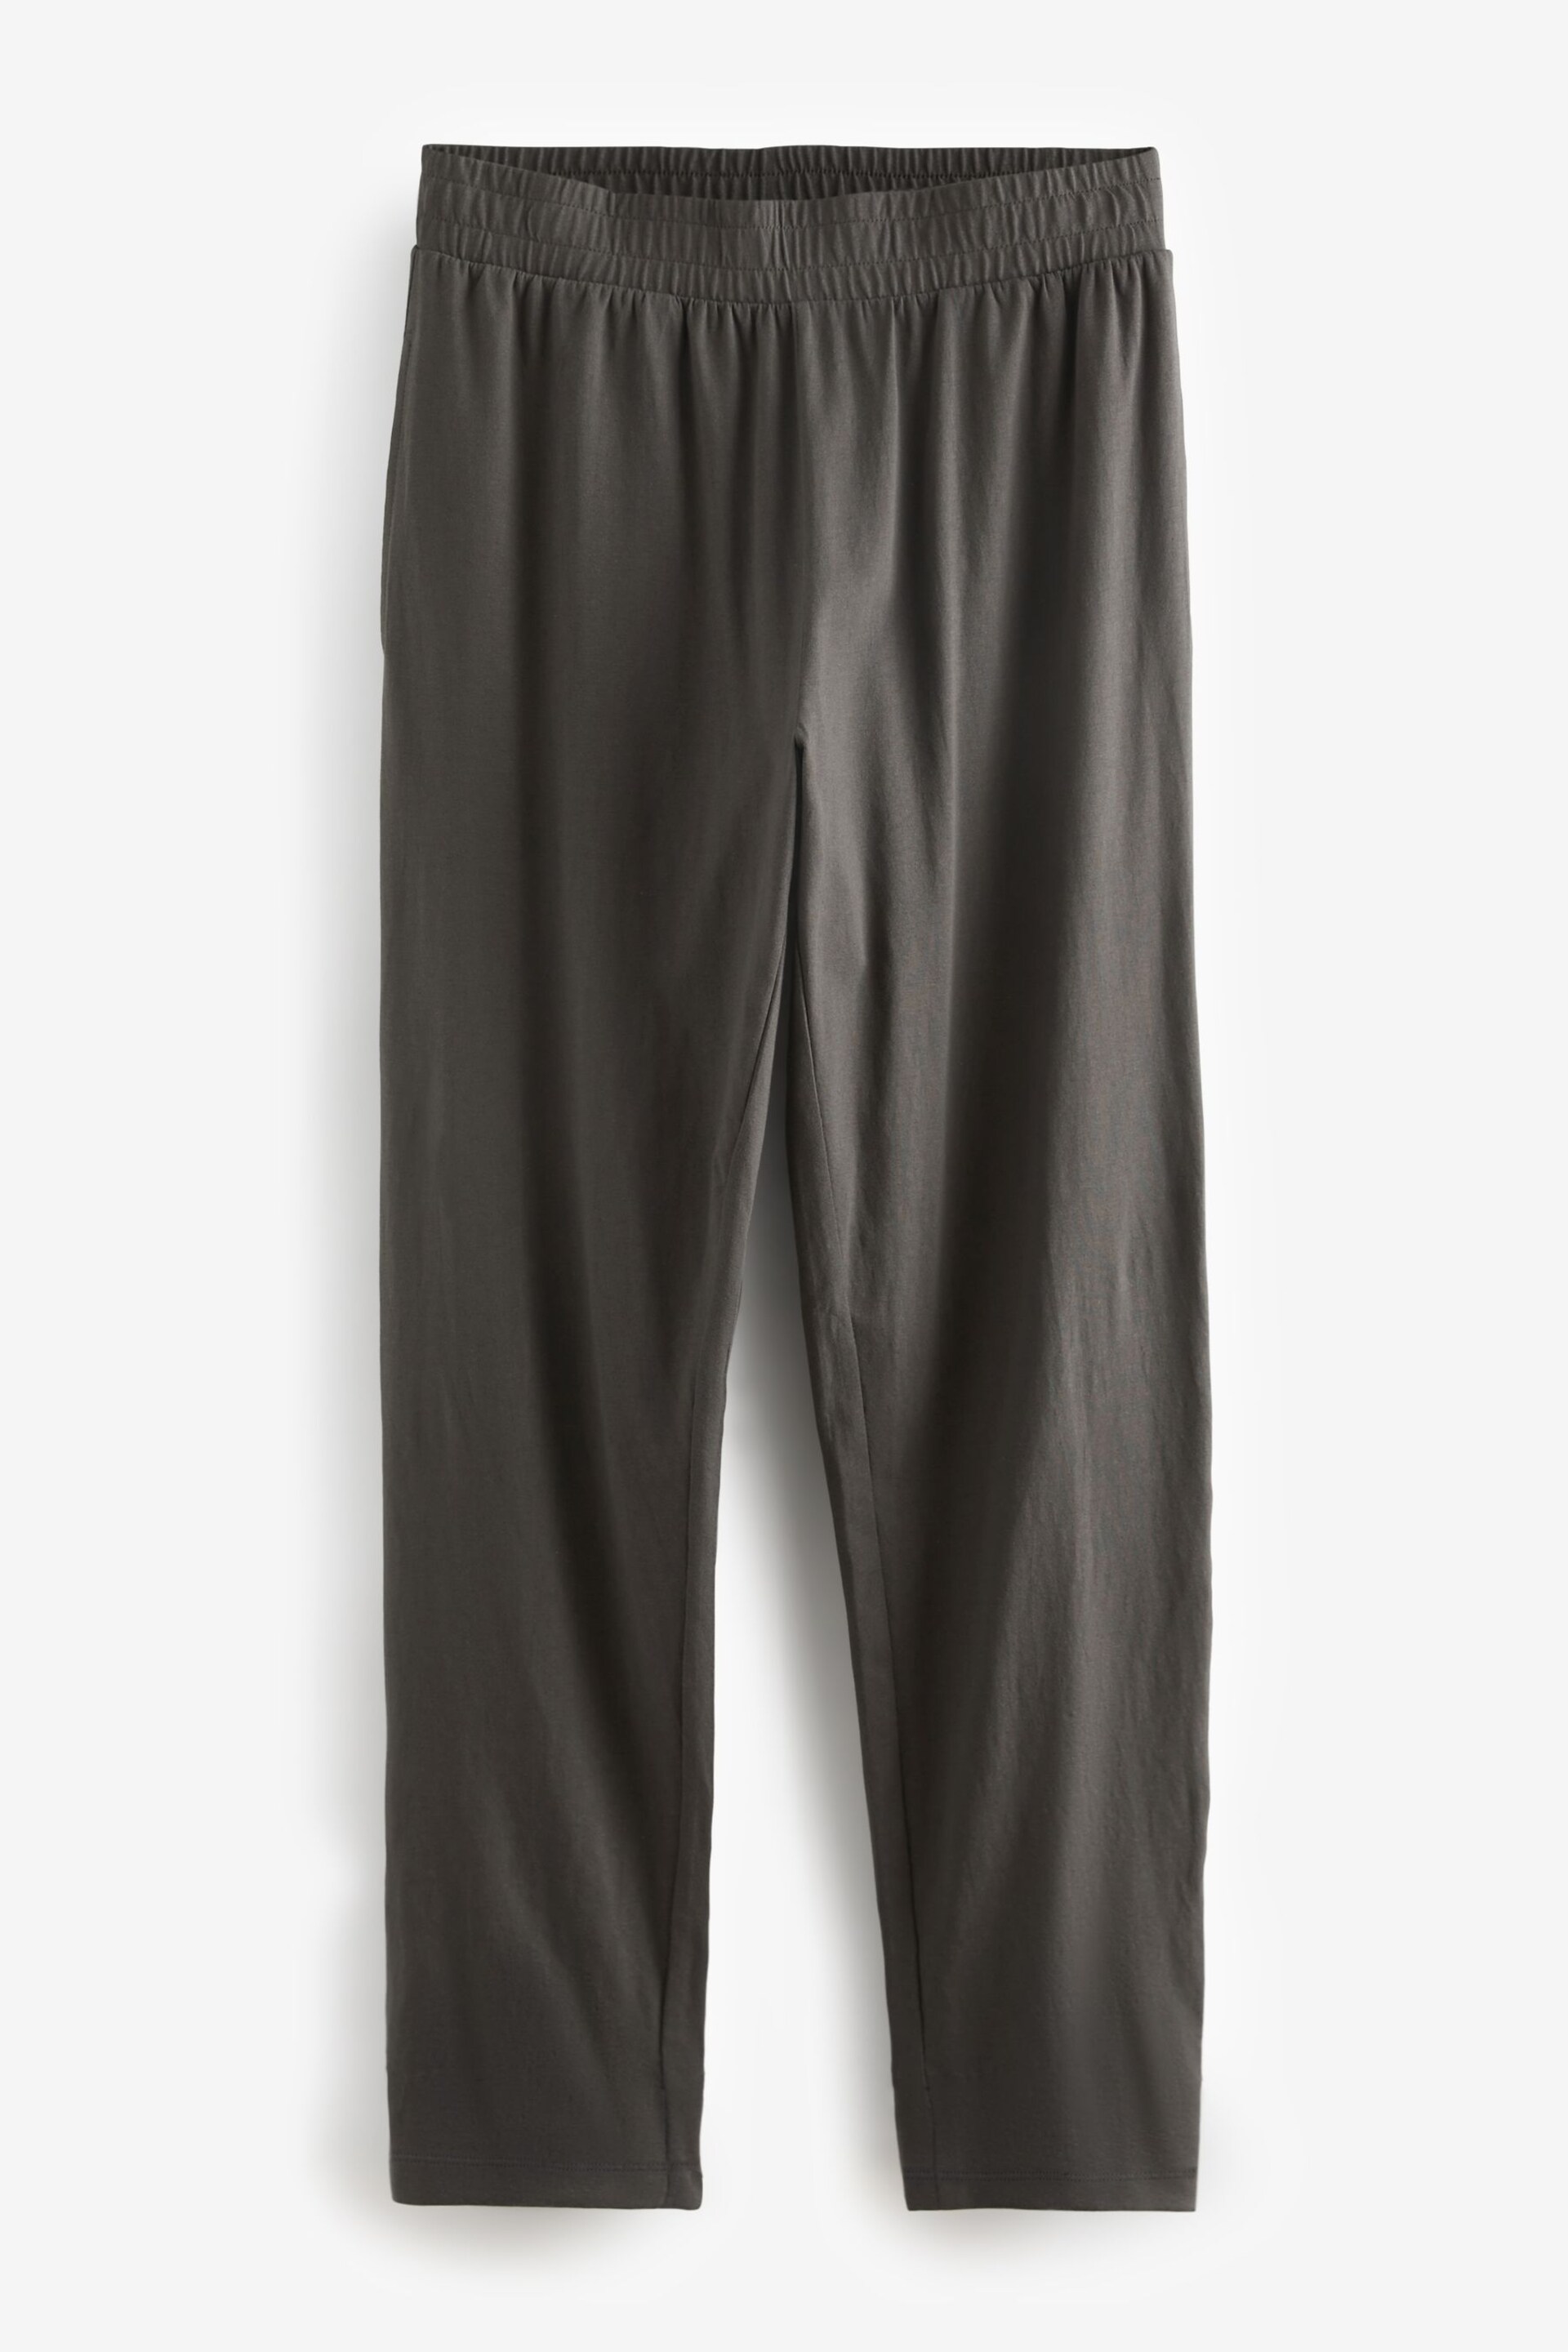 Grey/Sage Green Short Sleeve Jersey Pyjamas Set - Image 12 of 14